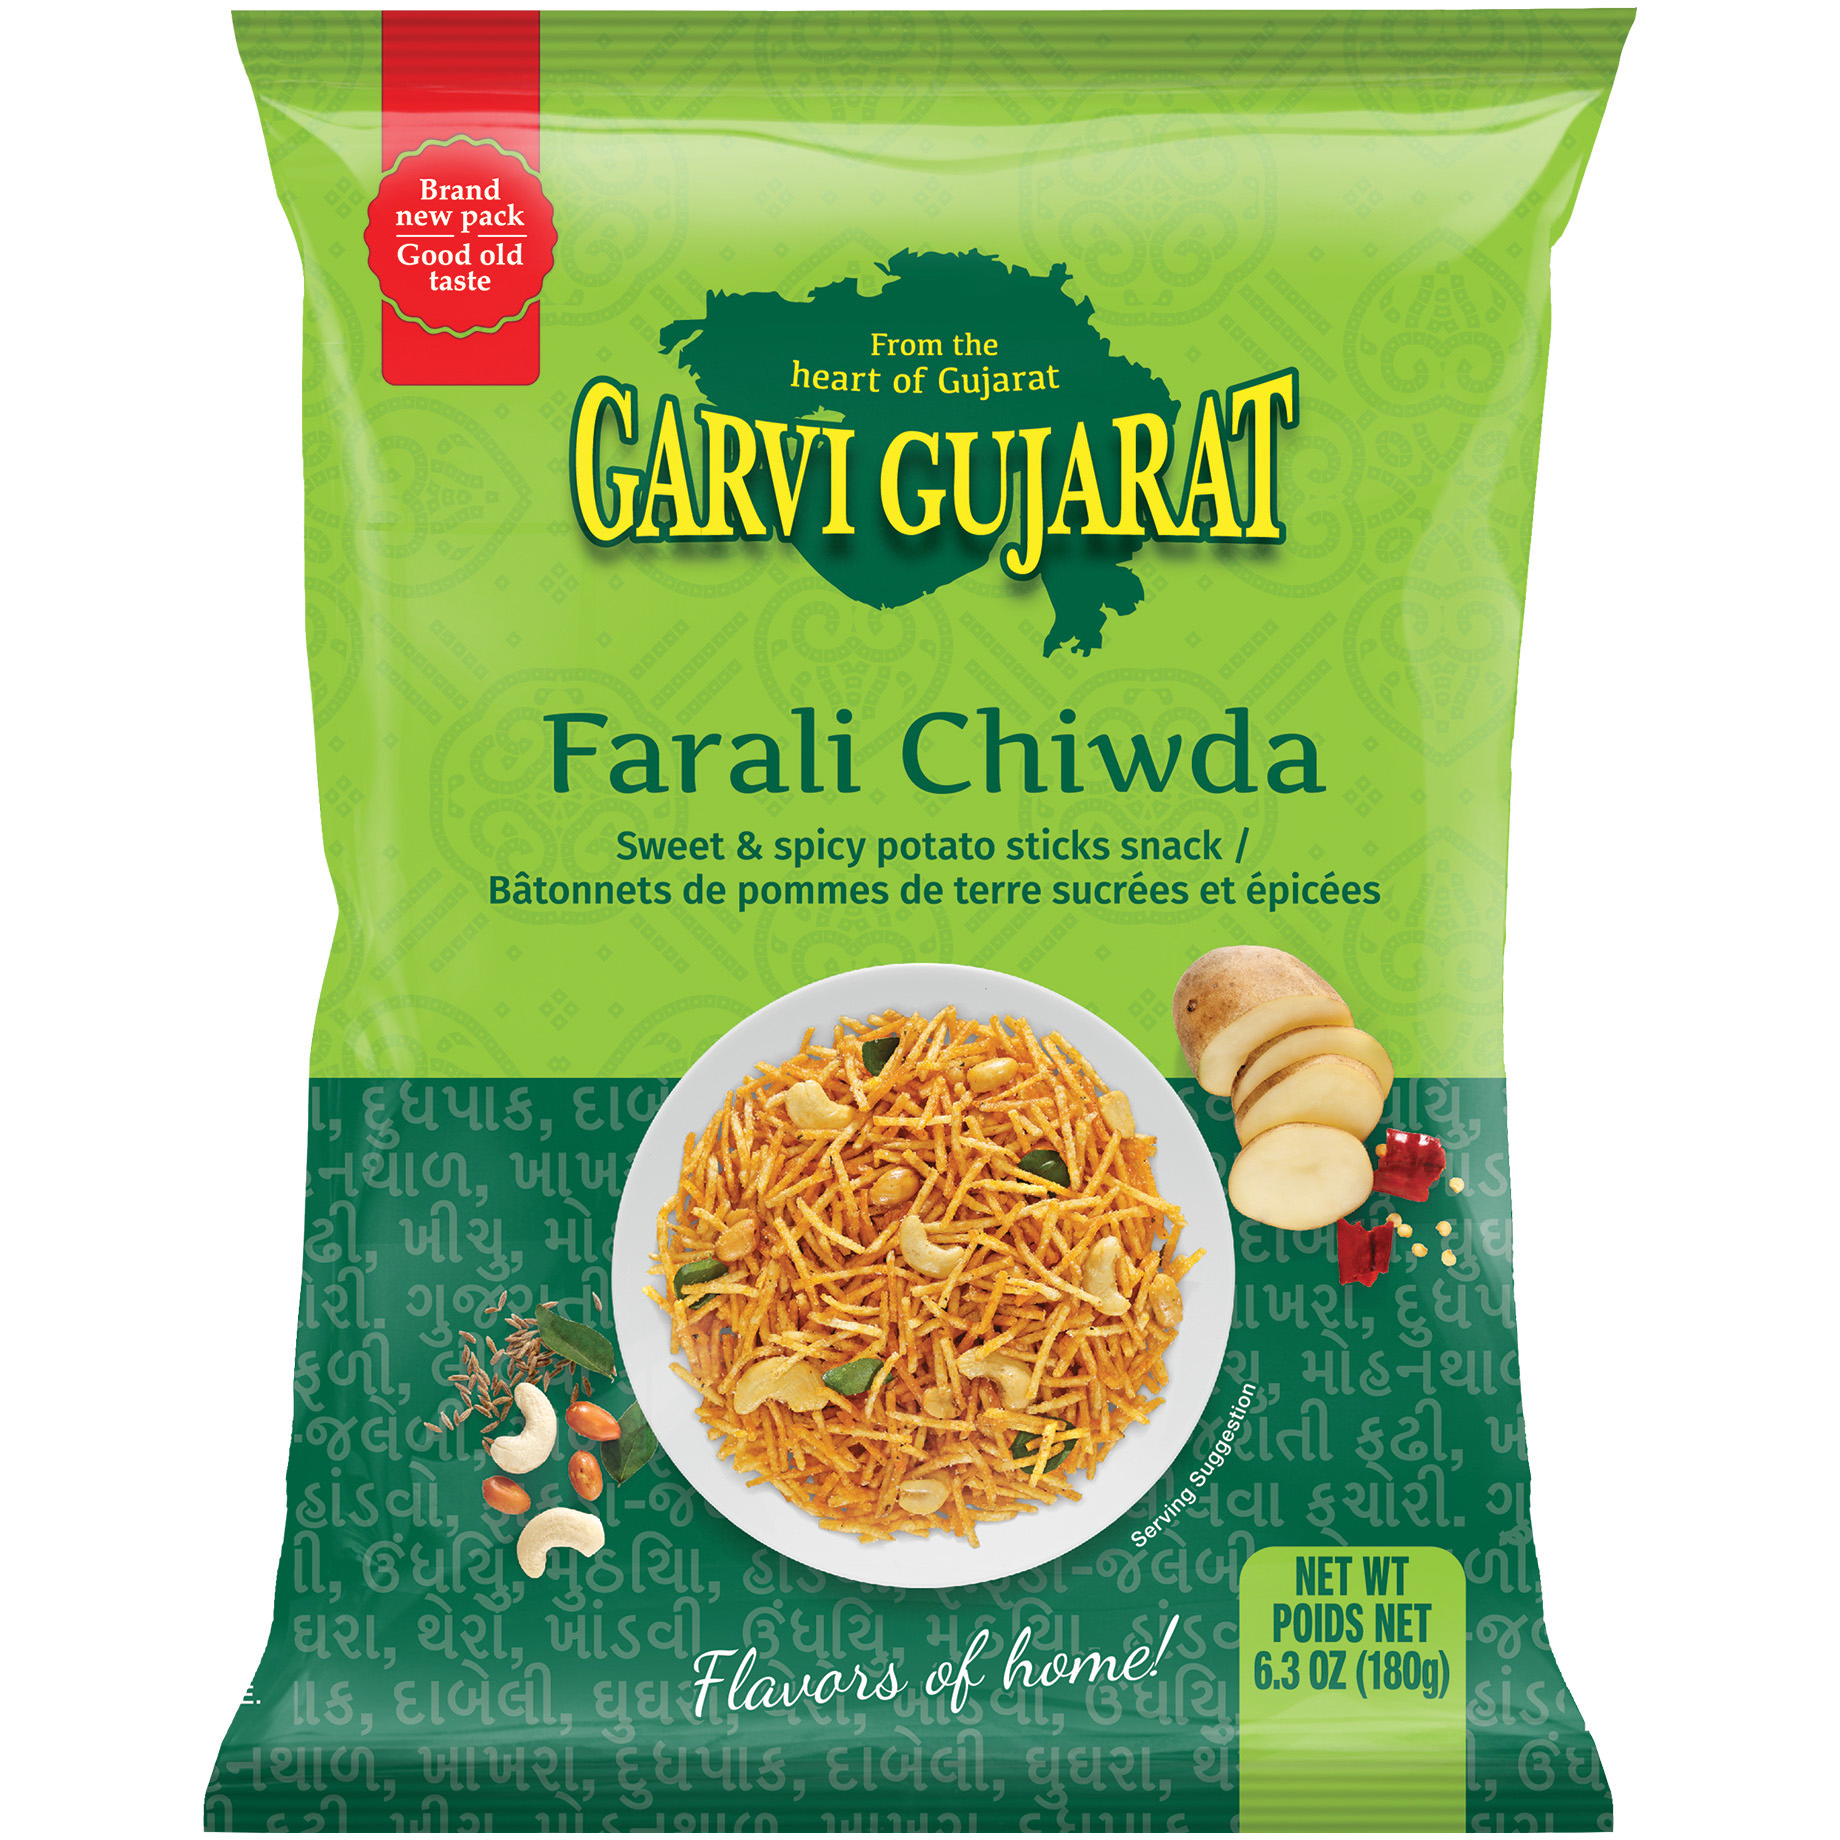 Case of 20 - Garvi Gujarat Farali Chiwda - 6.3 Oz (180 Gm) [Fs]